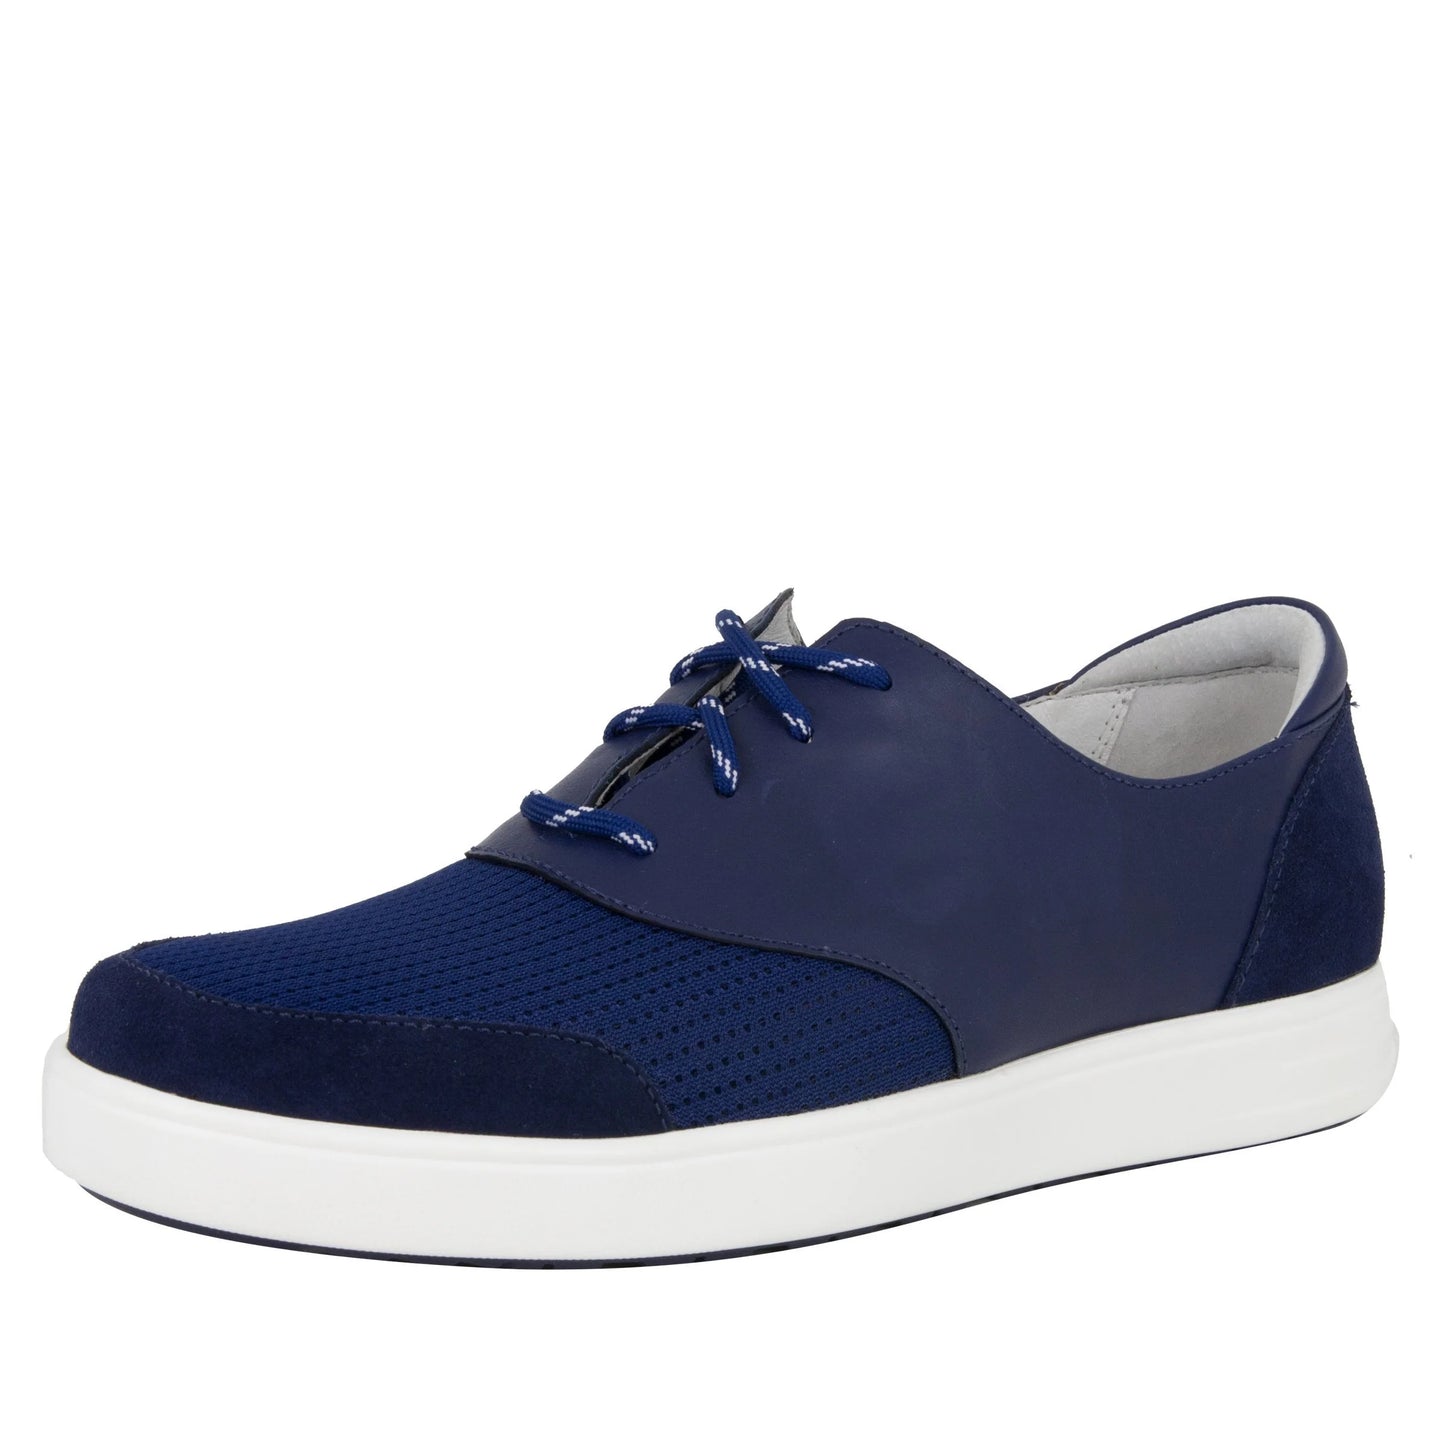 Alegria Men's Flexer Shoe - Blue